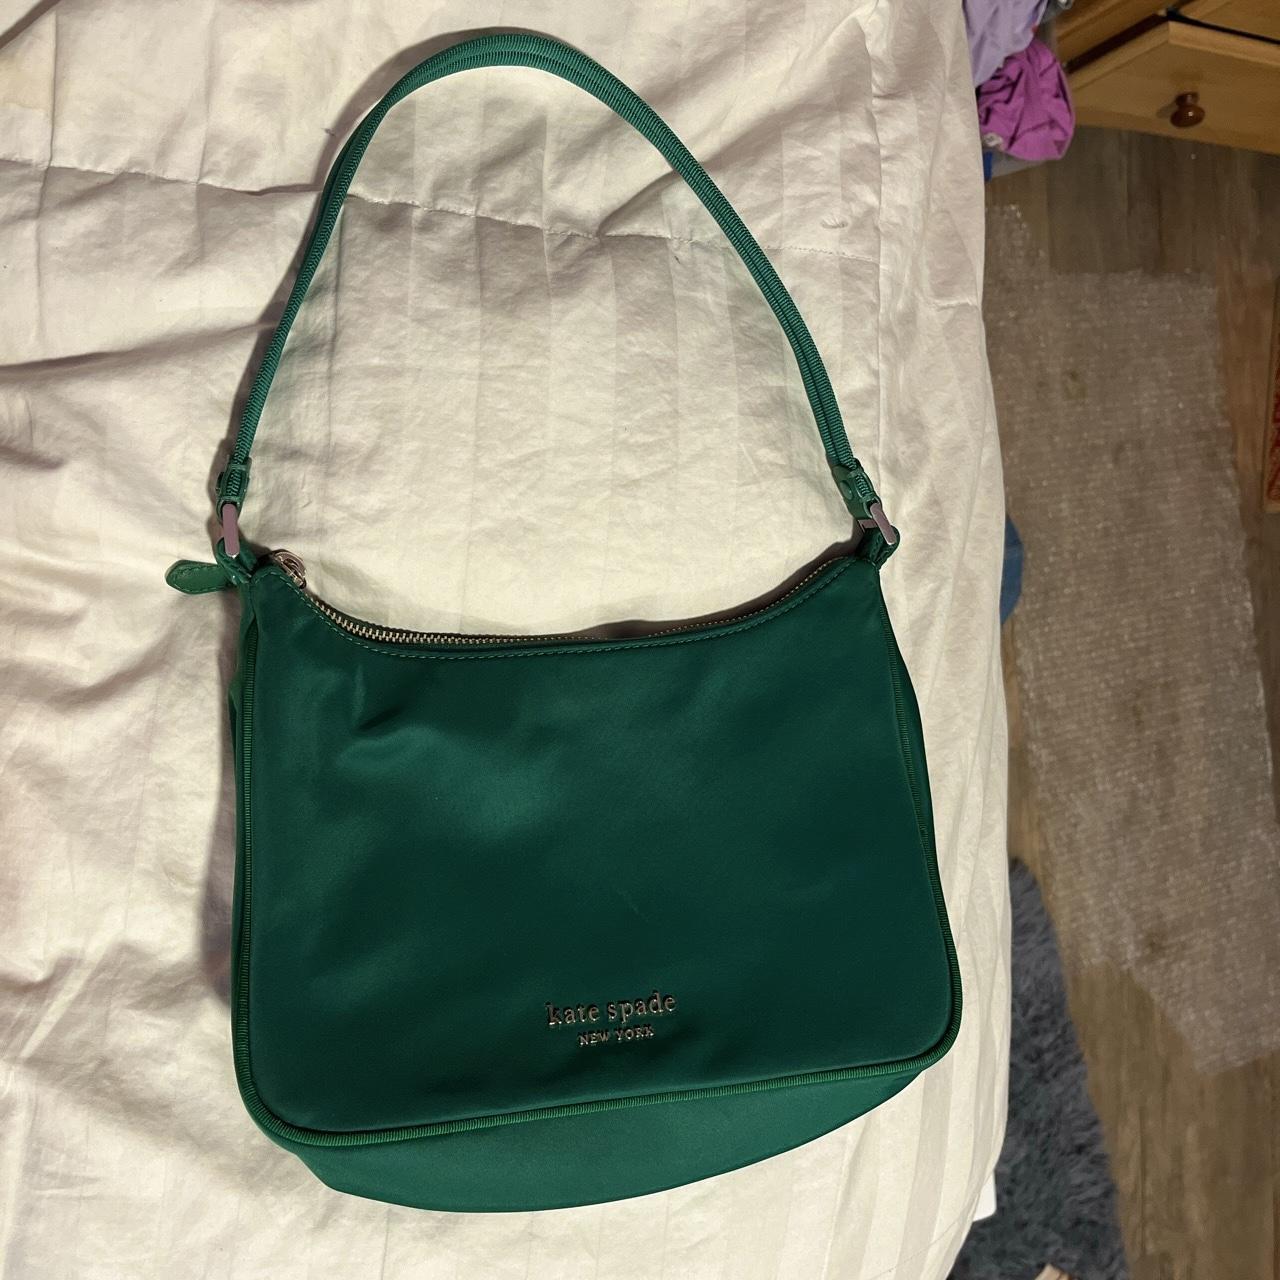 KATE SPADE Wellesley Quinn Emerald Green Leather Satchel Handbag | eBay